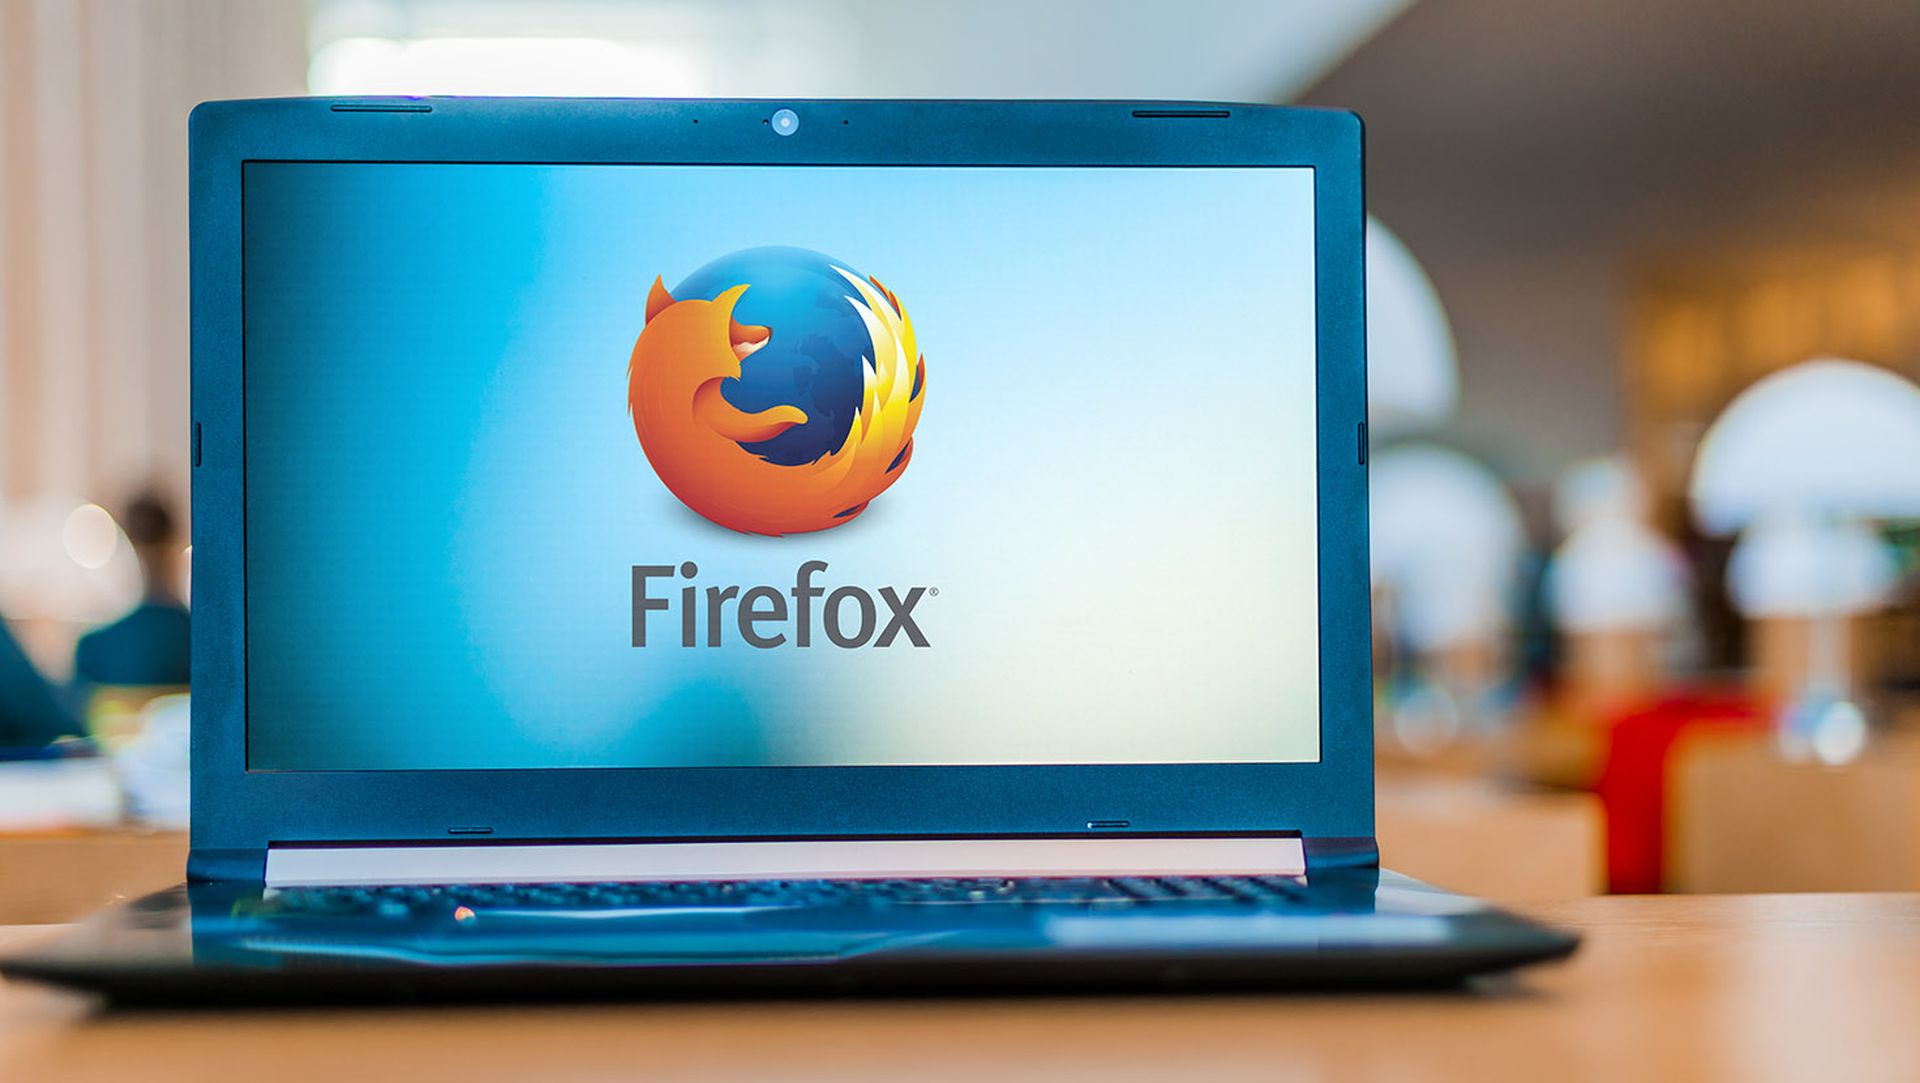 Firefox logo on a laptop screen